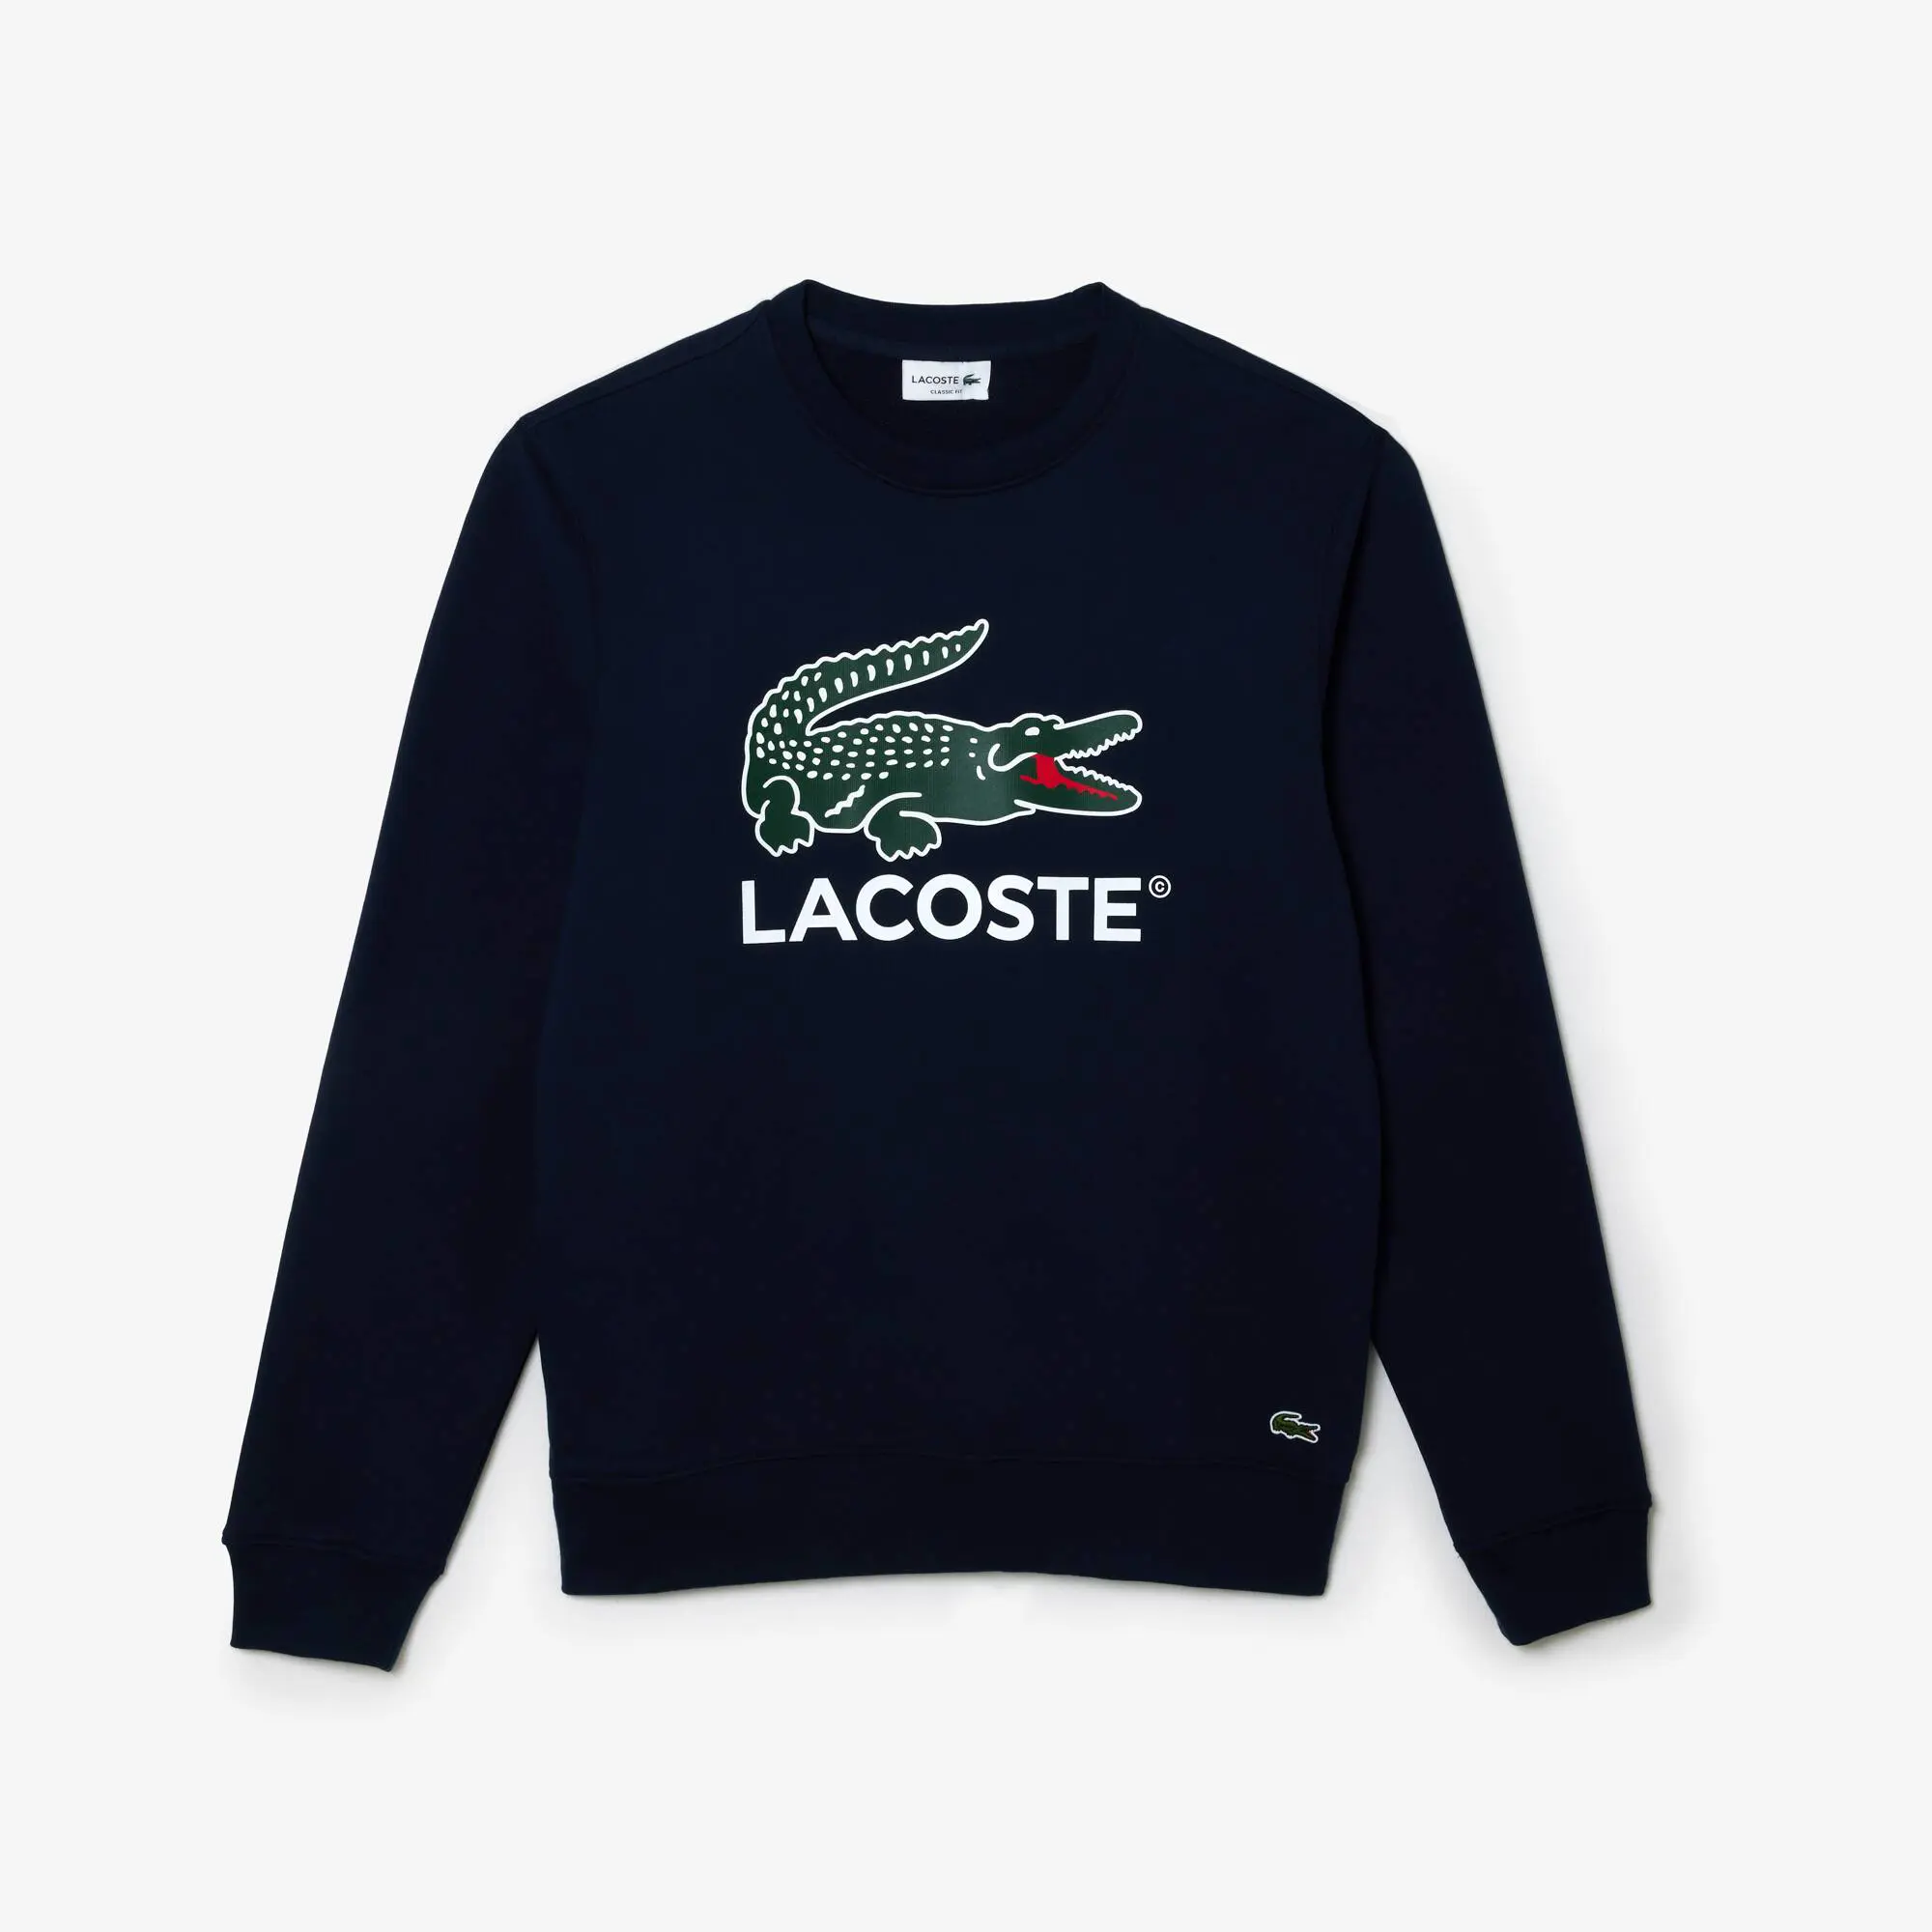 Lacoste Classic Fit Cotton Fleece Sweatshirt. 2